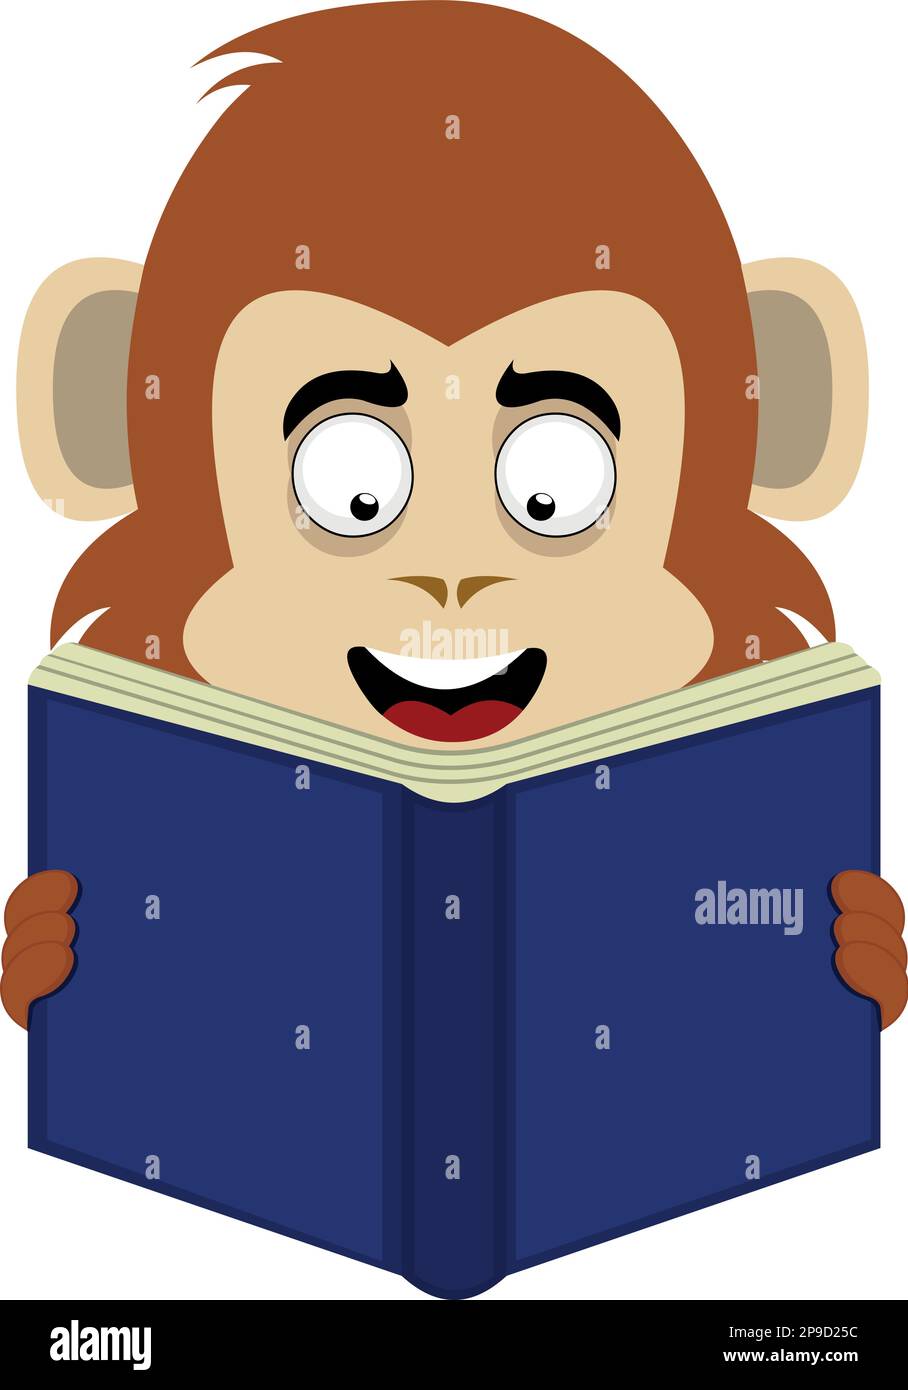 vector illustration face of a monkey primate cartoon reading a book Stock Vector